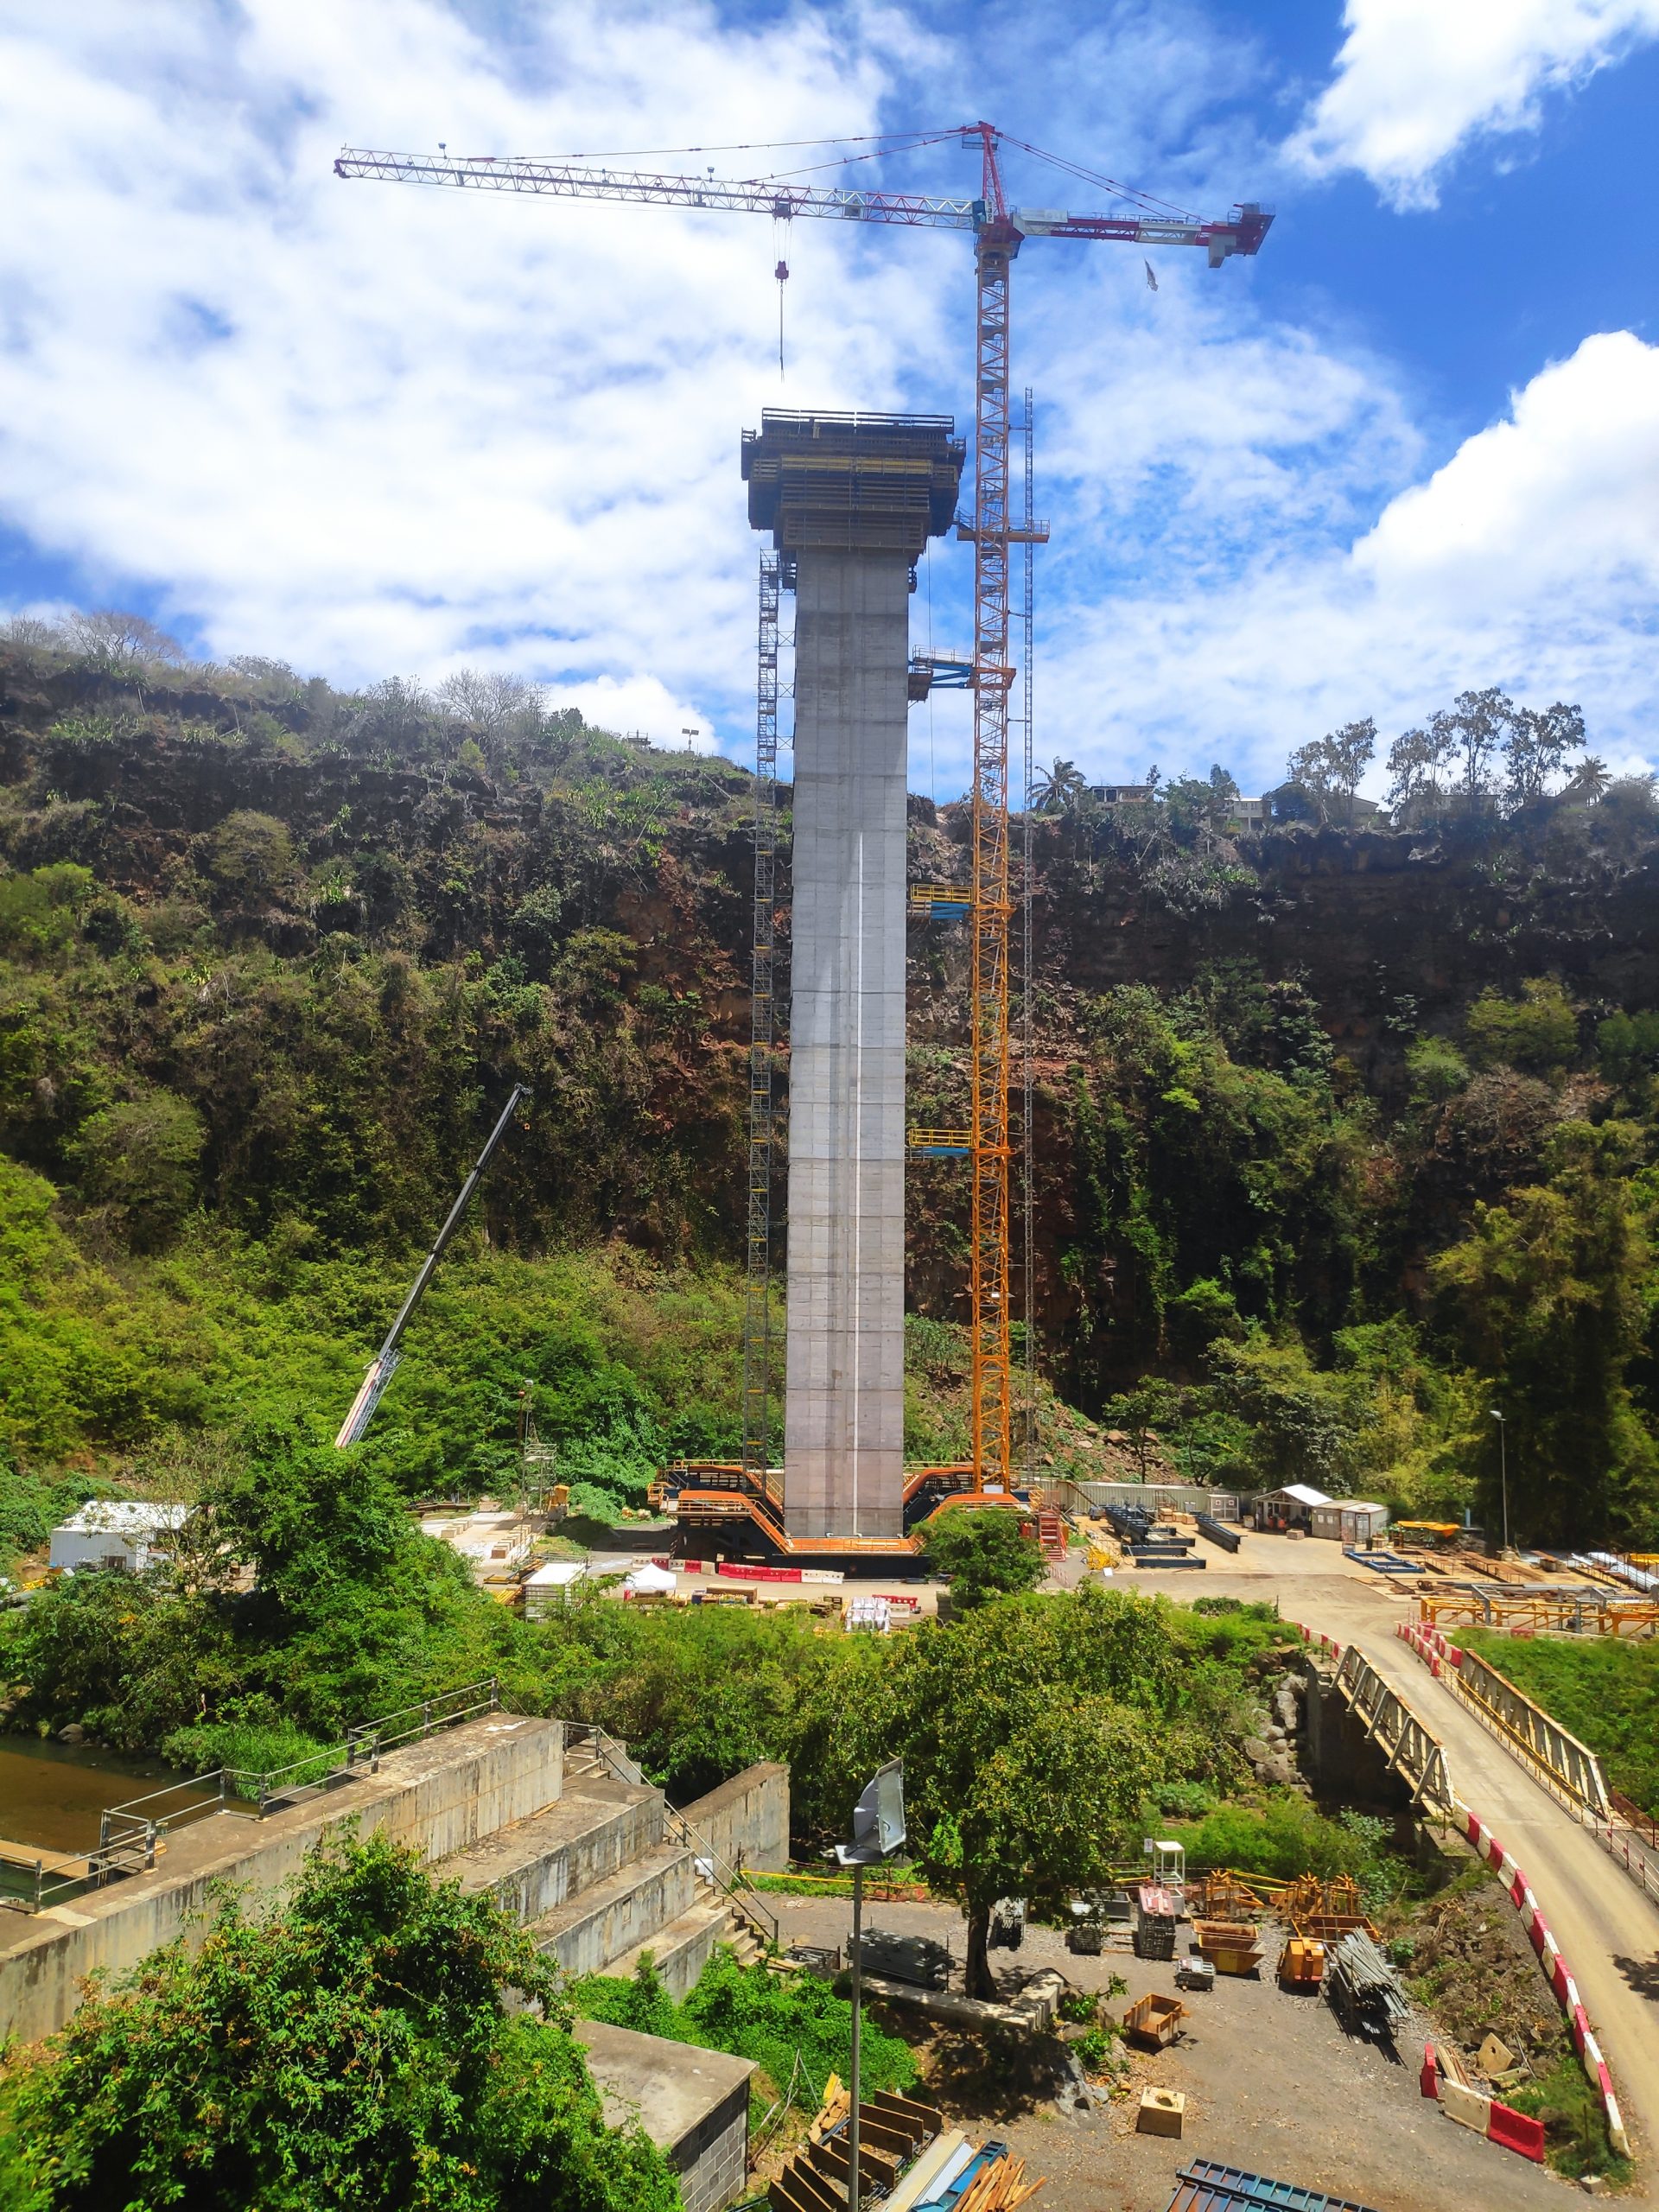 Overhead form traveller Julius Nyerere Hydropower Project (JNHPP) by RÚBRICA BRIDGES